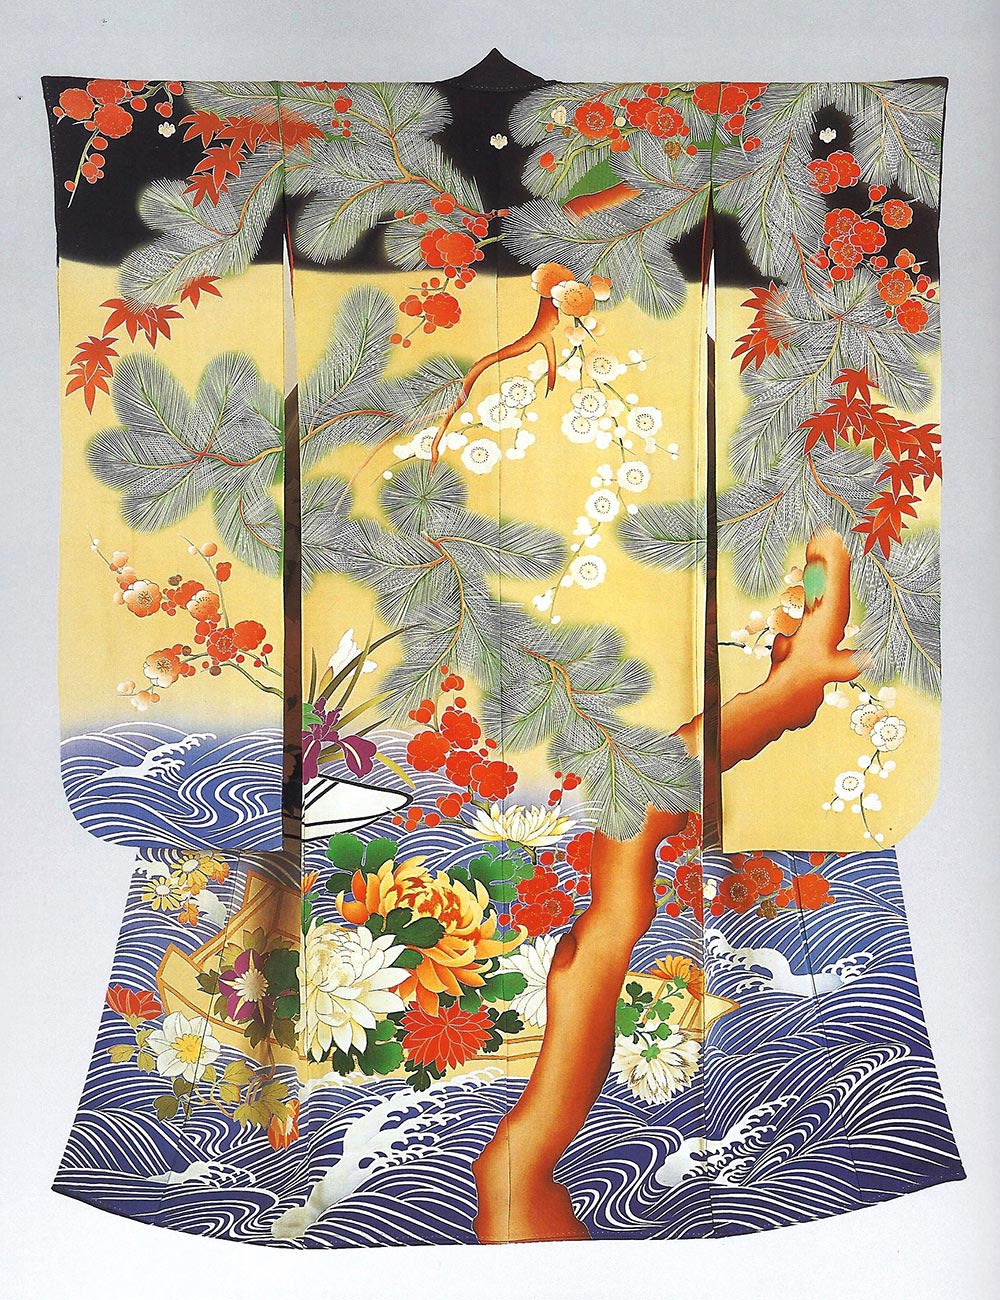 colour photograph of a decoratively detailed kimono